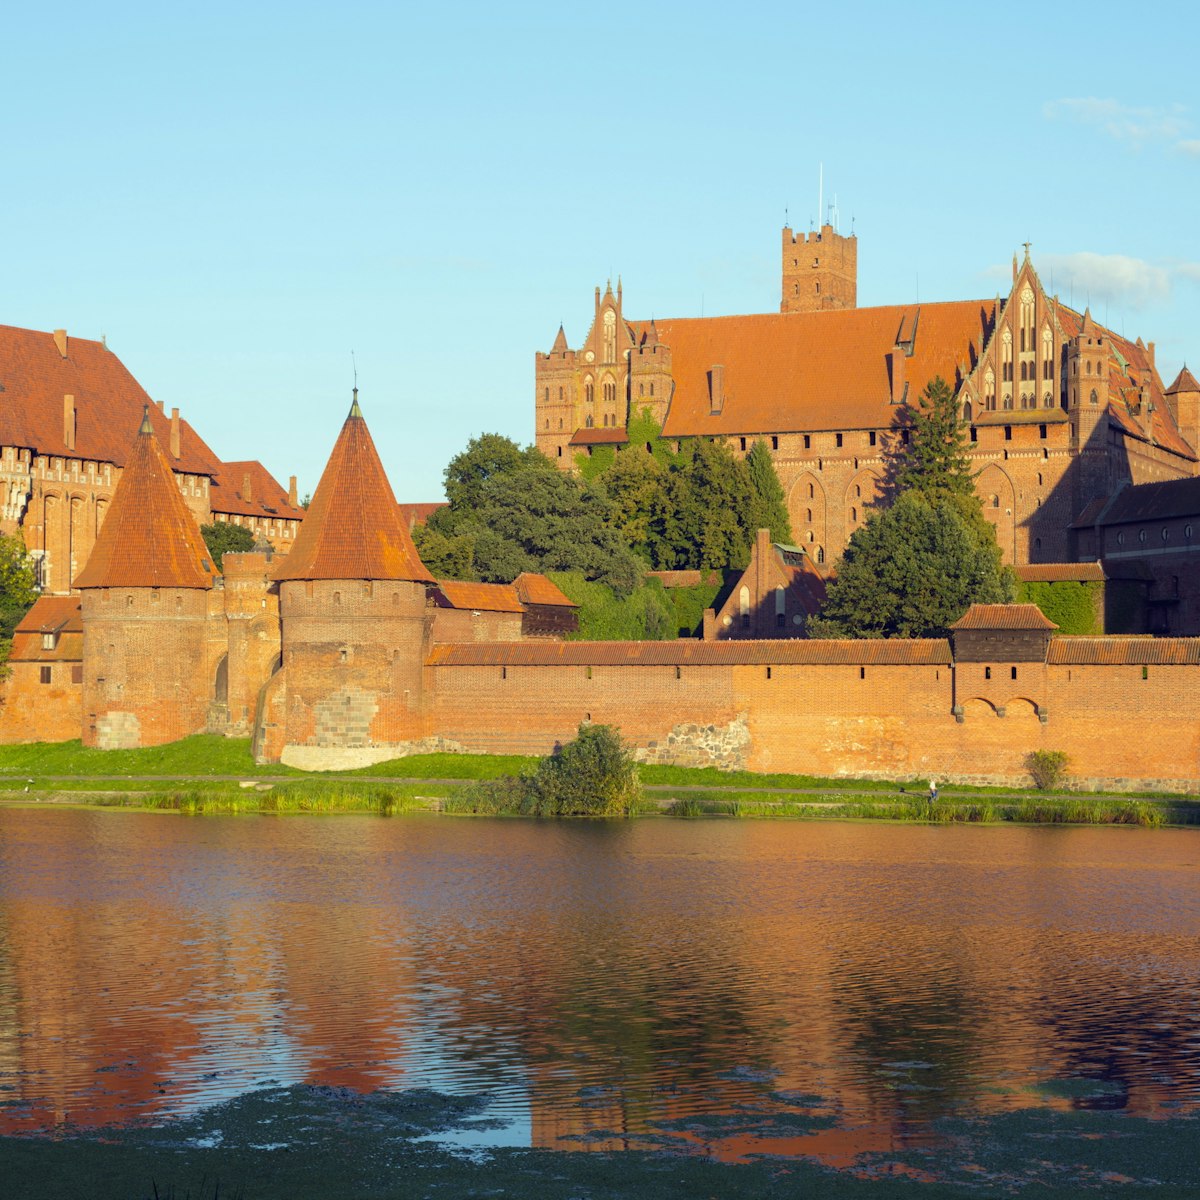 Medieval Malbork Castle, Marienburg Fortress of Mary, UNESCO World Heritage Site, Pomerania, Poland, Europe